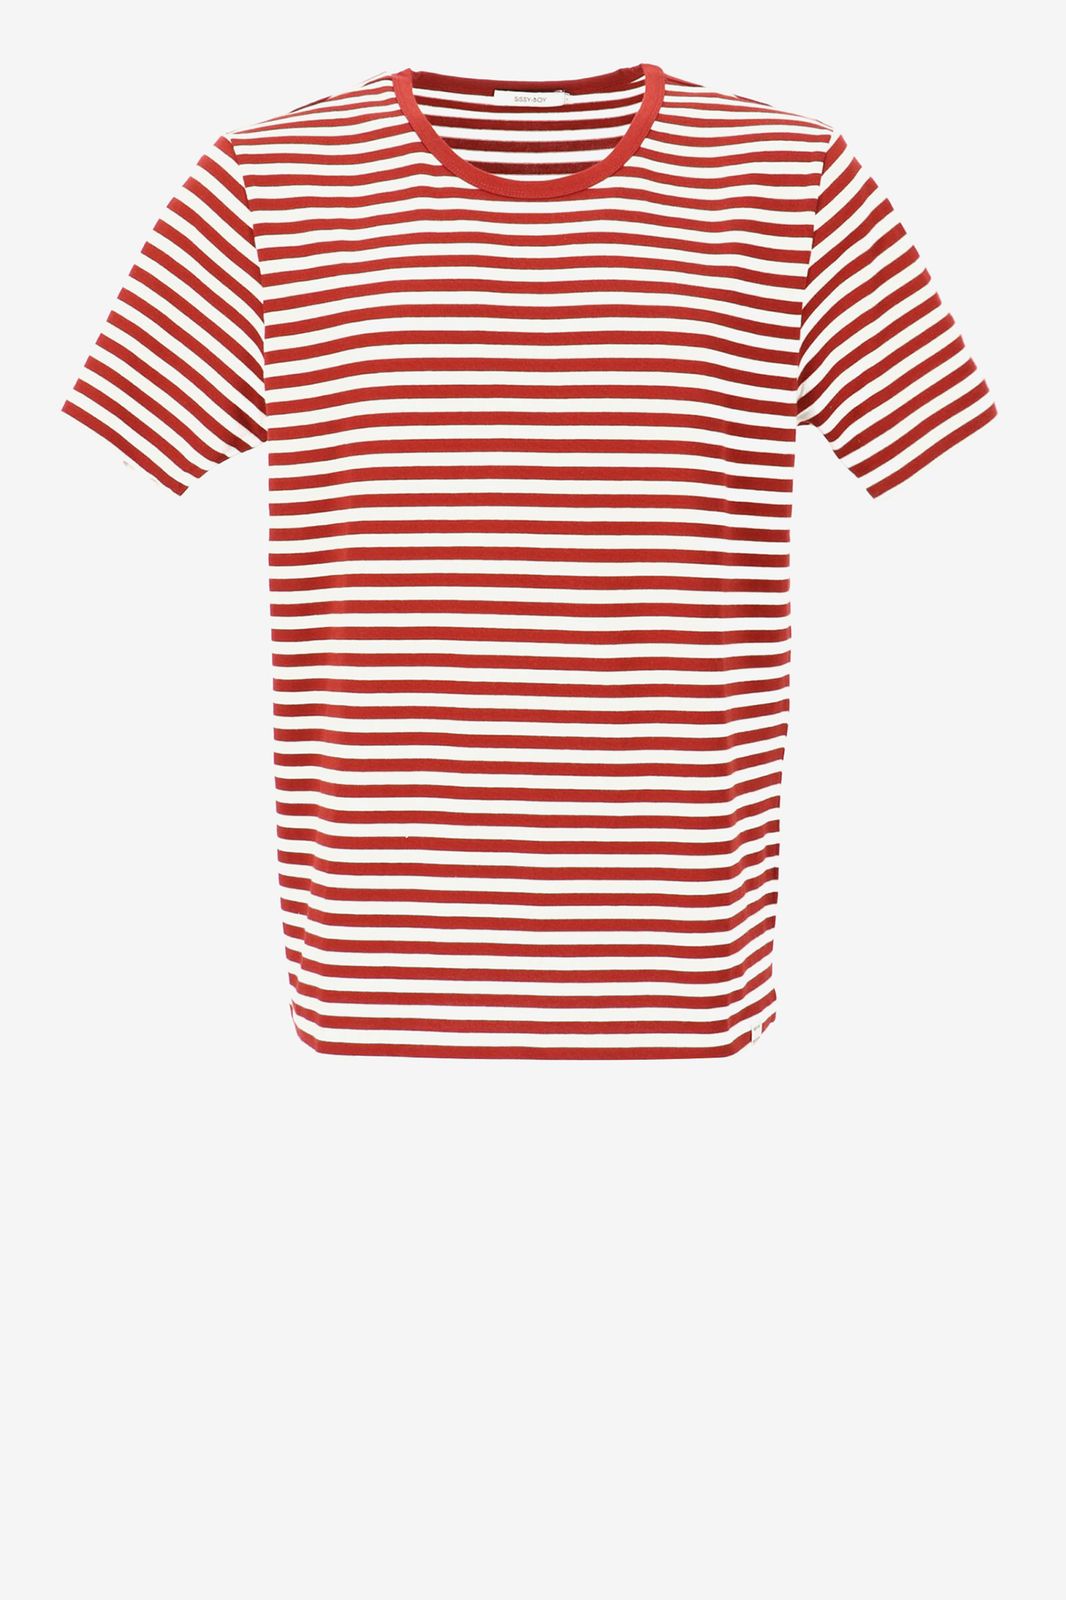 fusie jury Plantkunde T-shirt met rode strepen